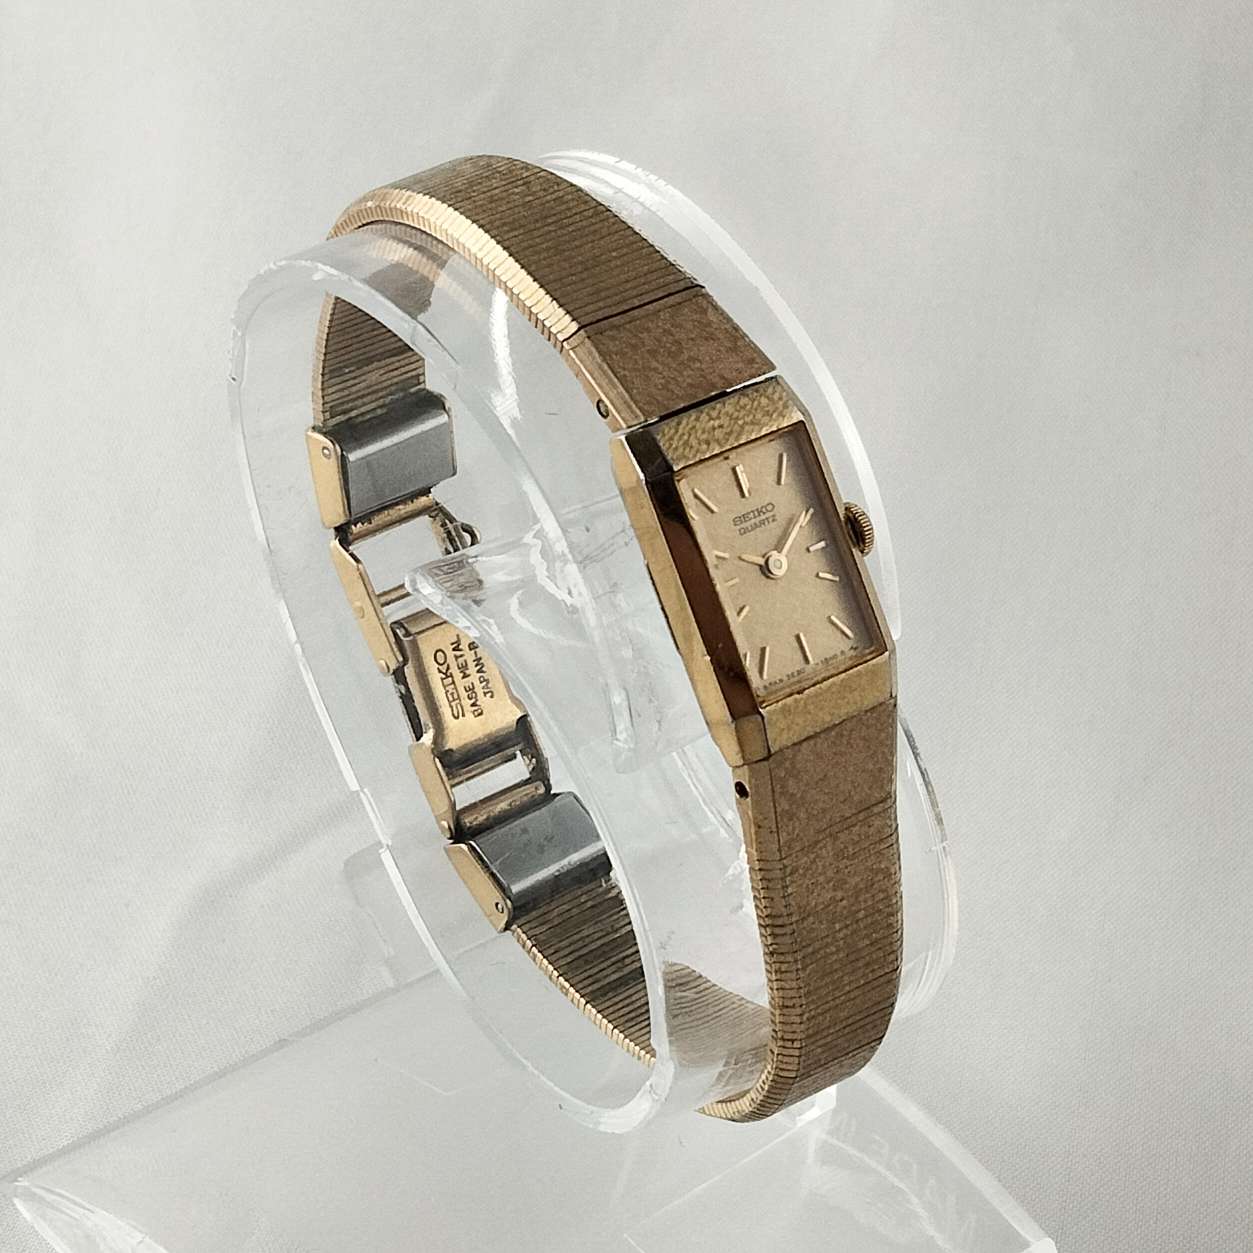 Seiko Women's Petite Gold Tone Watch, Rectangular Dial, Bracelet Strap